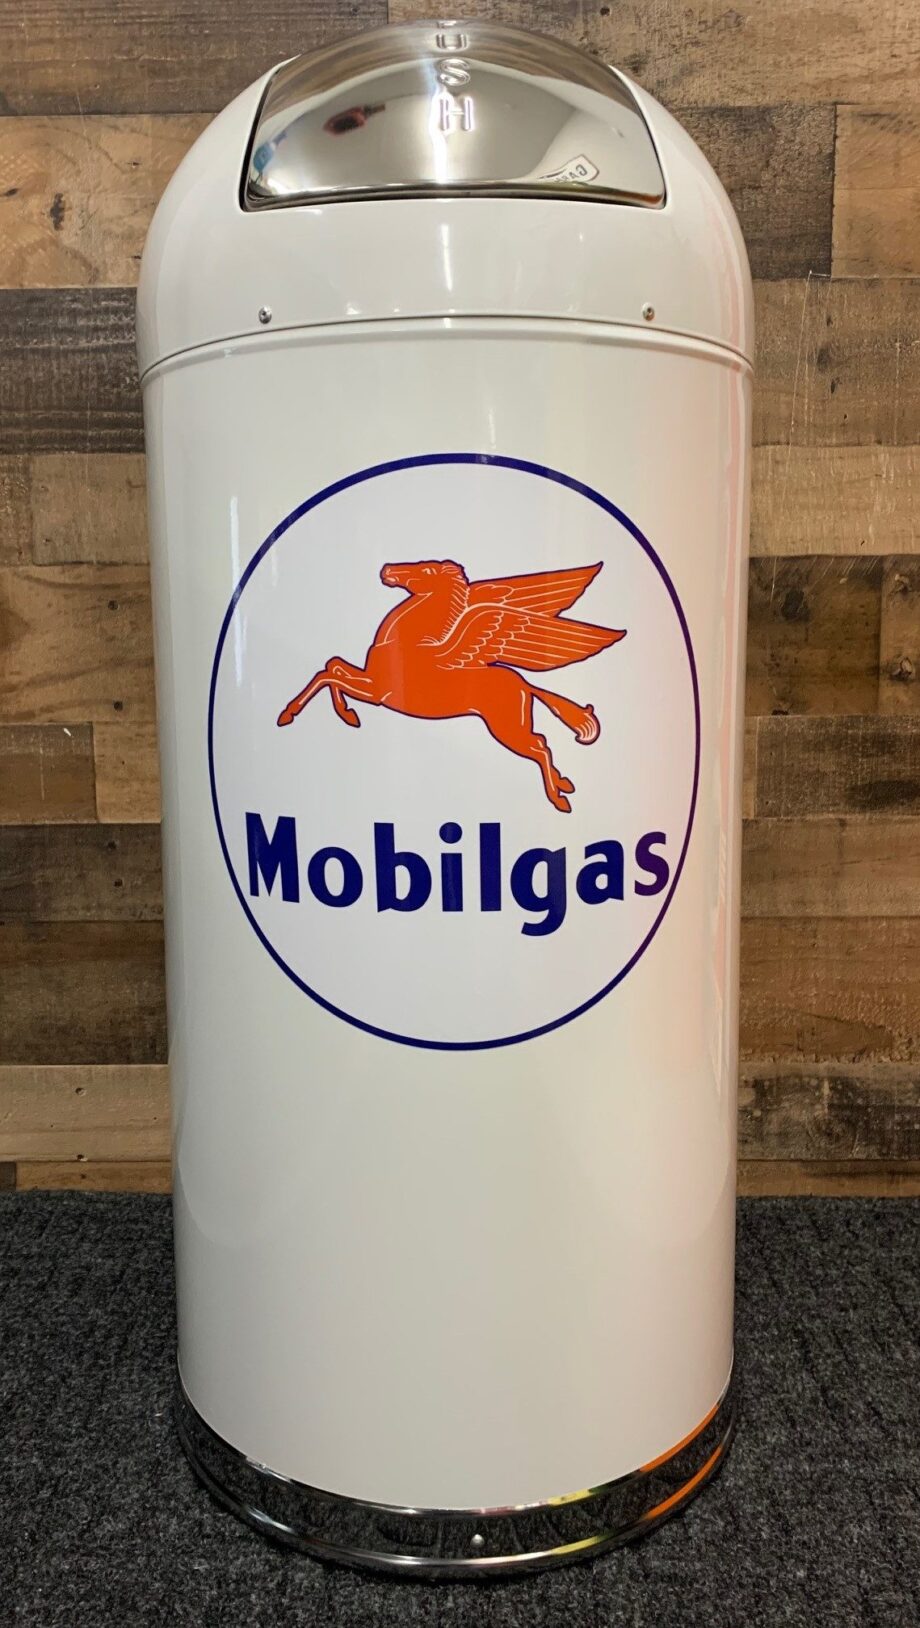 Mobilgas Retro Style Trash Can